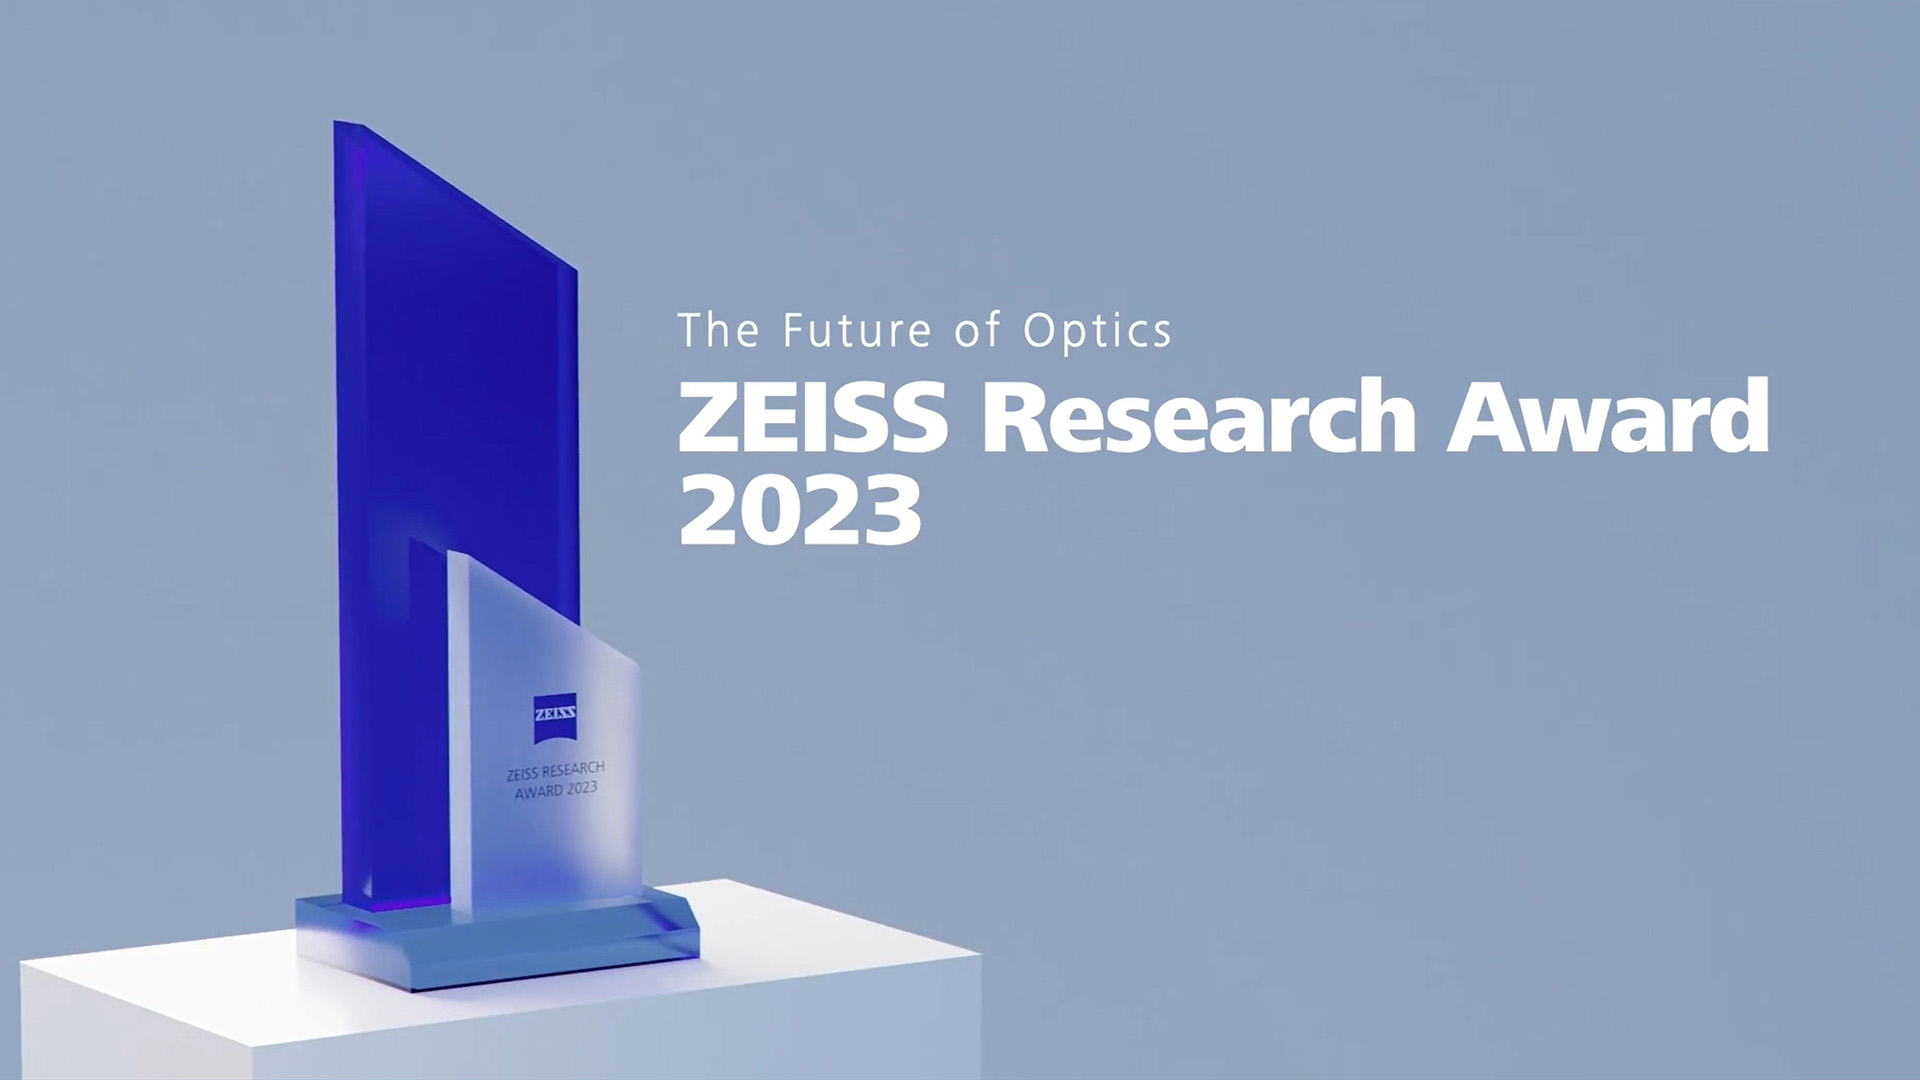 ZEISS Research Award 2023